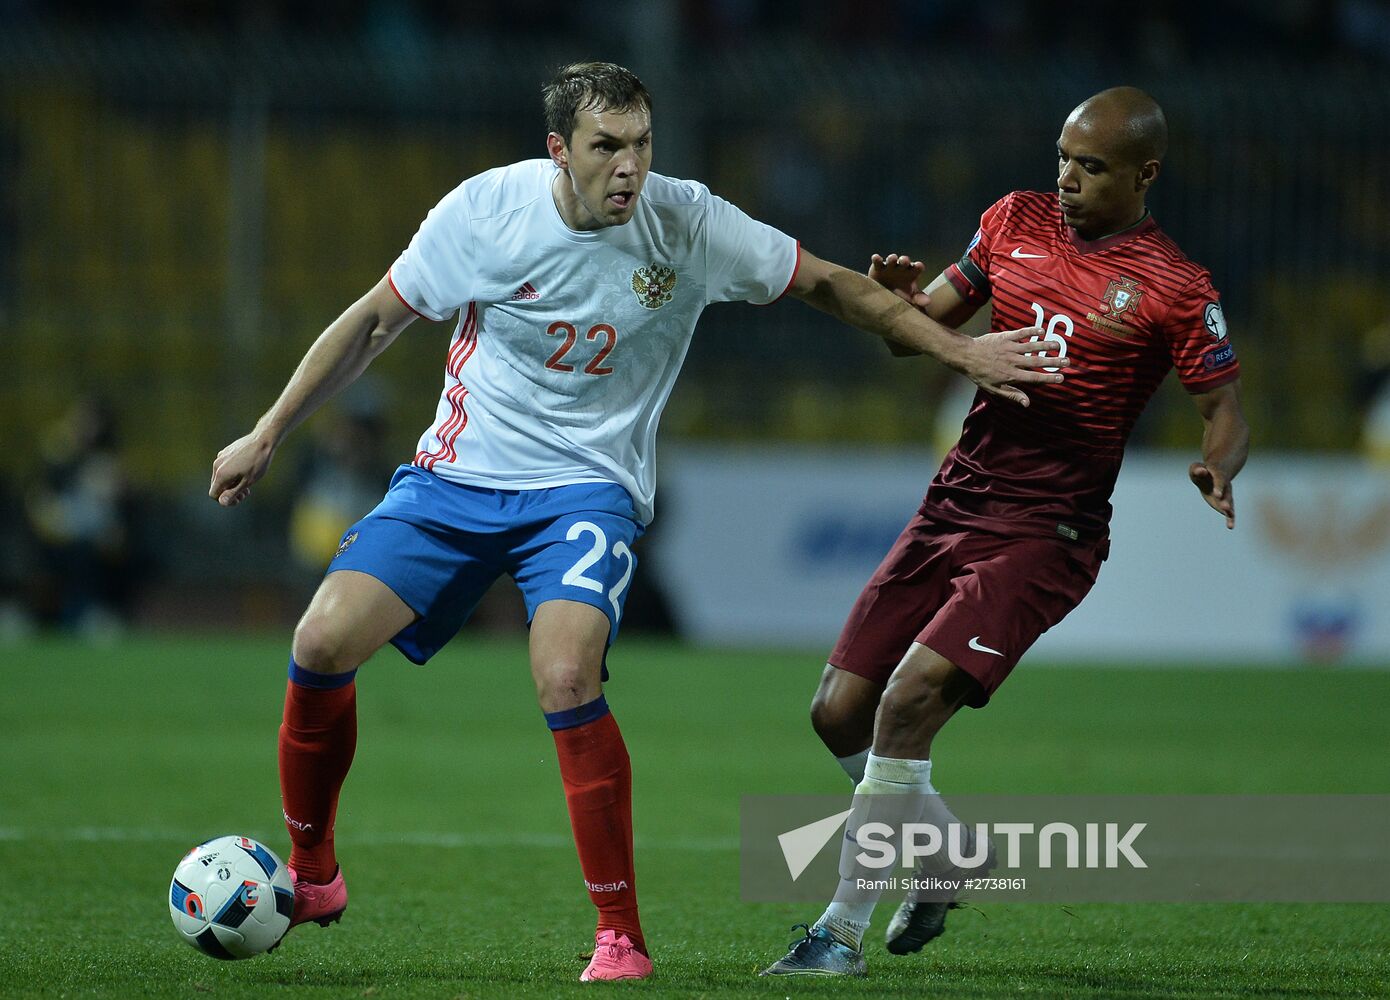 Football. Russia vs. Portugal exhibition game